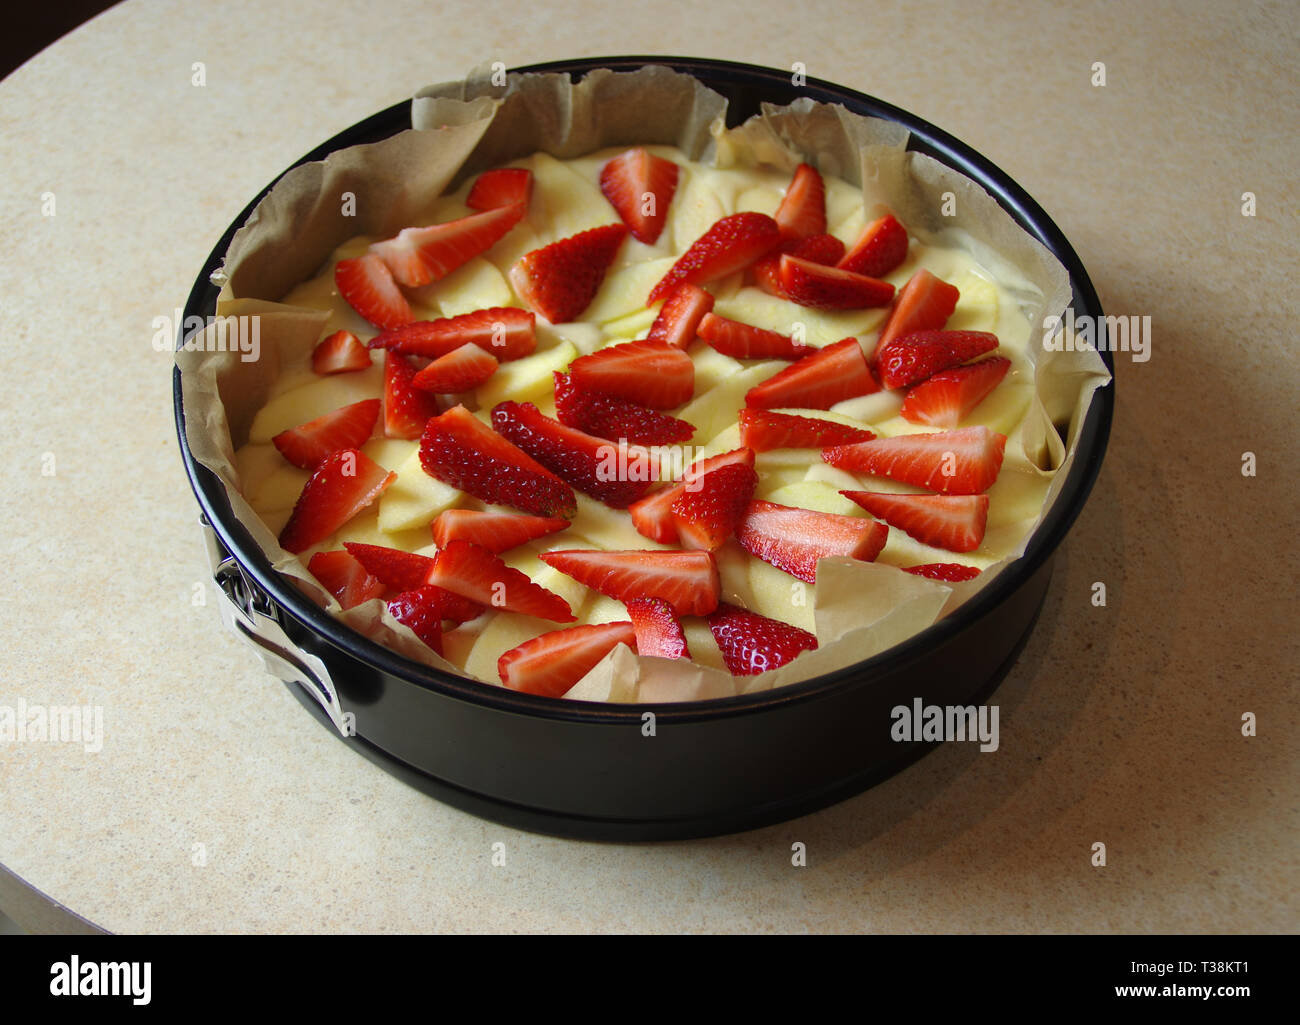 Preparing yeast cake with apple and strawberry to baking. Fresh raw homemade fruit pastry. Stock Photo